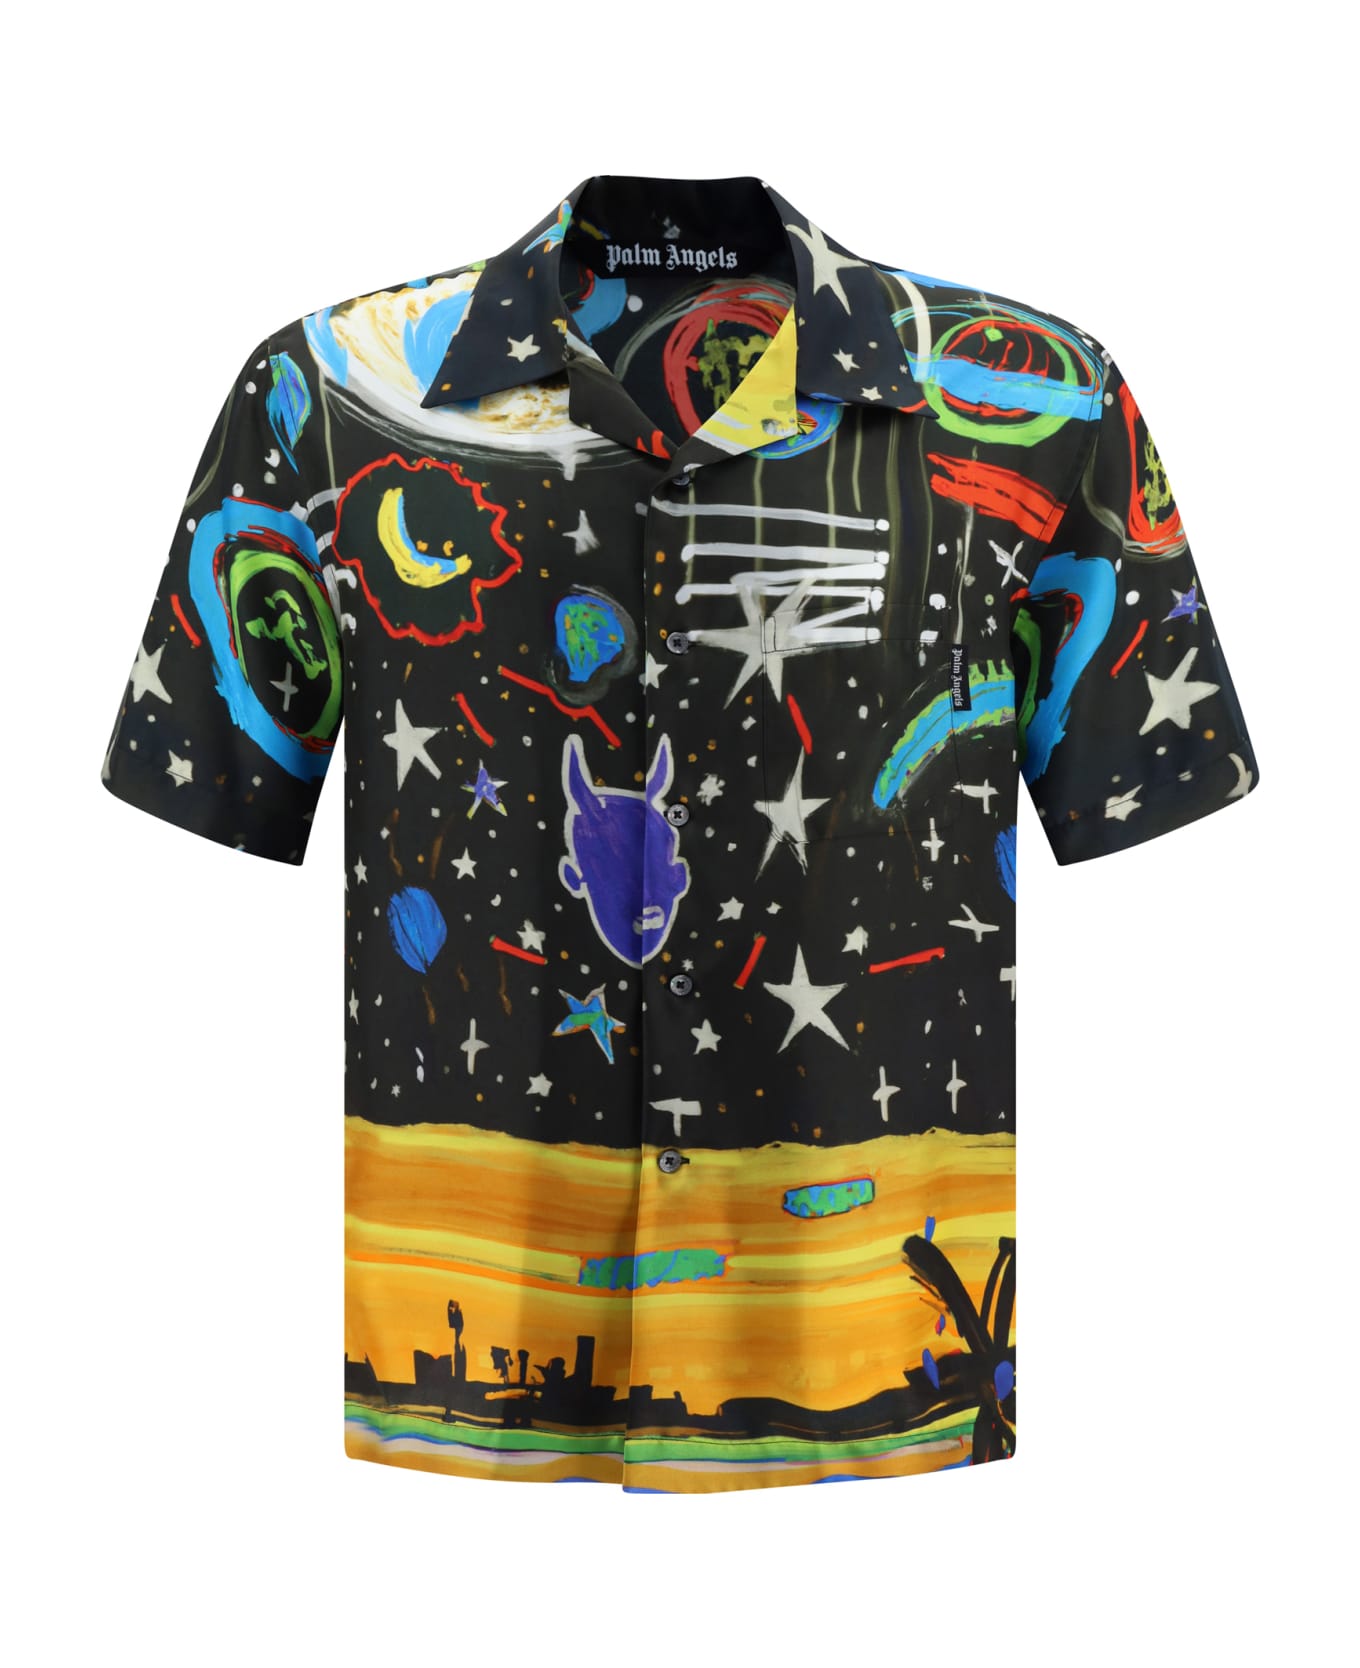 Palm Angels Starry Night Bowling Shirt - Black Mult